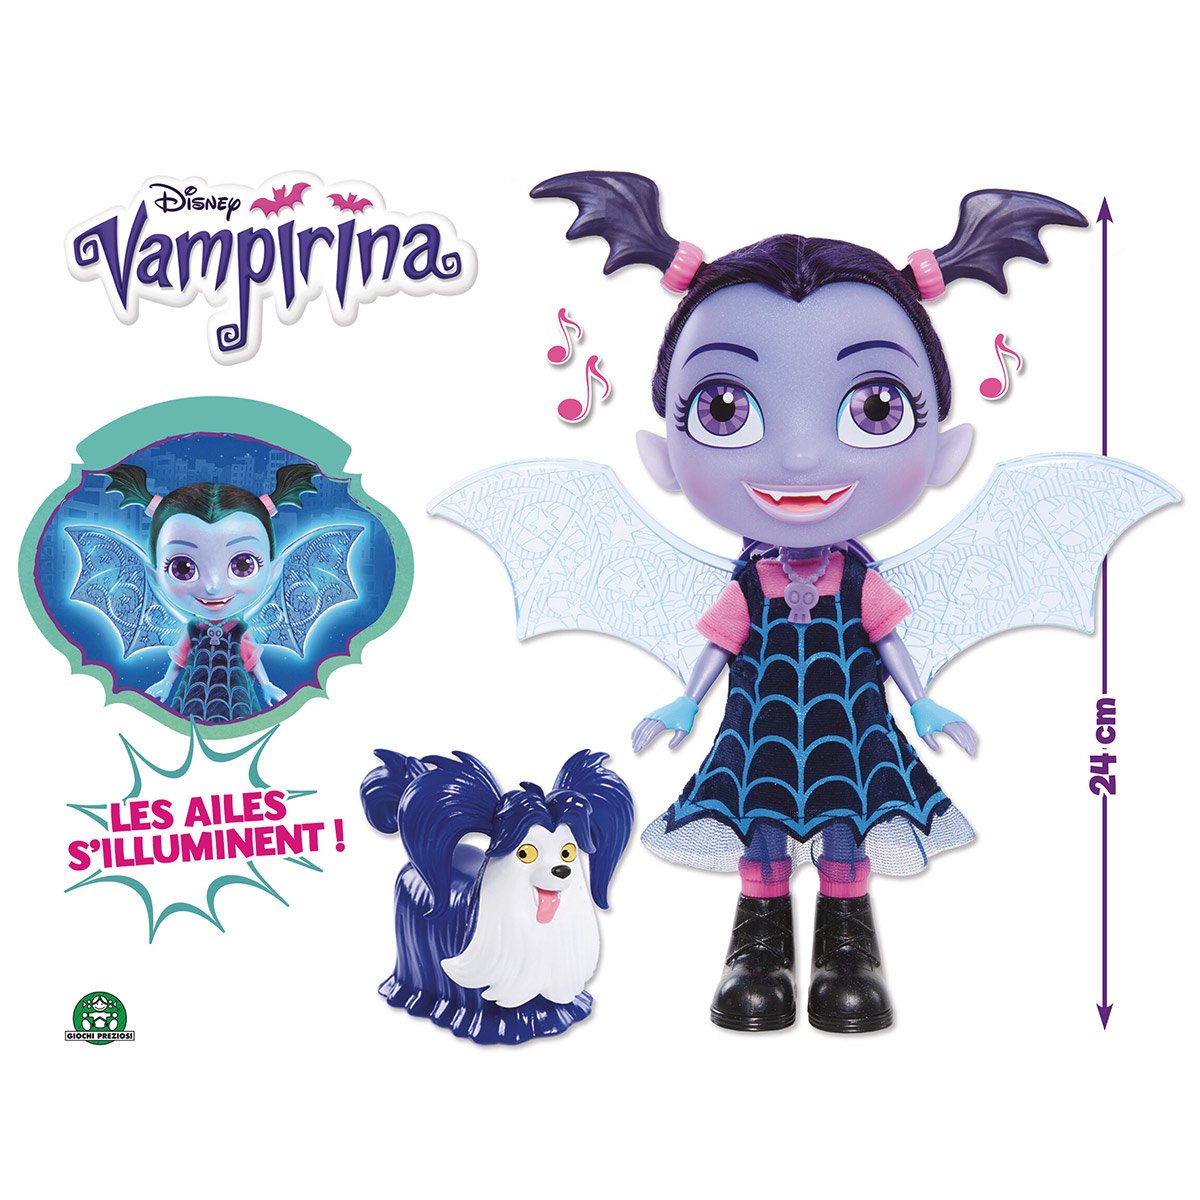 Vampirina - Vampirinia Bat-Poupée 24 cm avec ailes lumineuses et